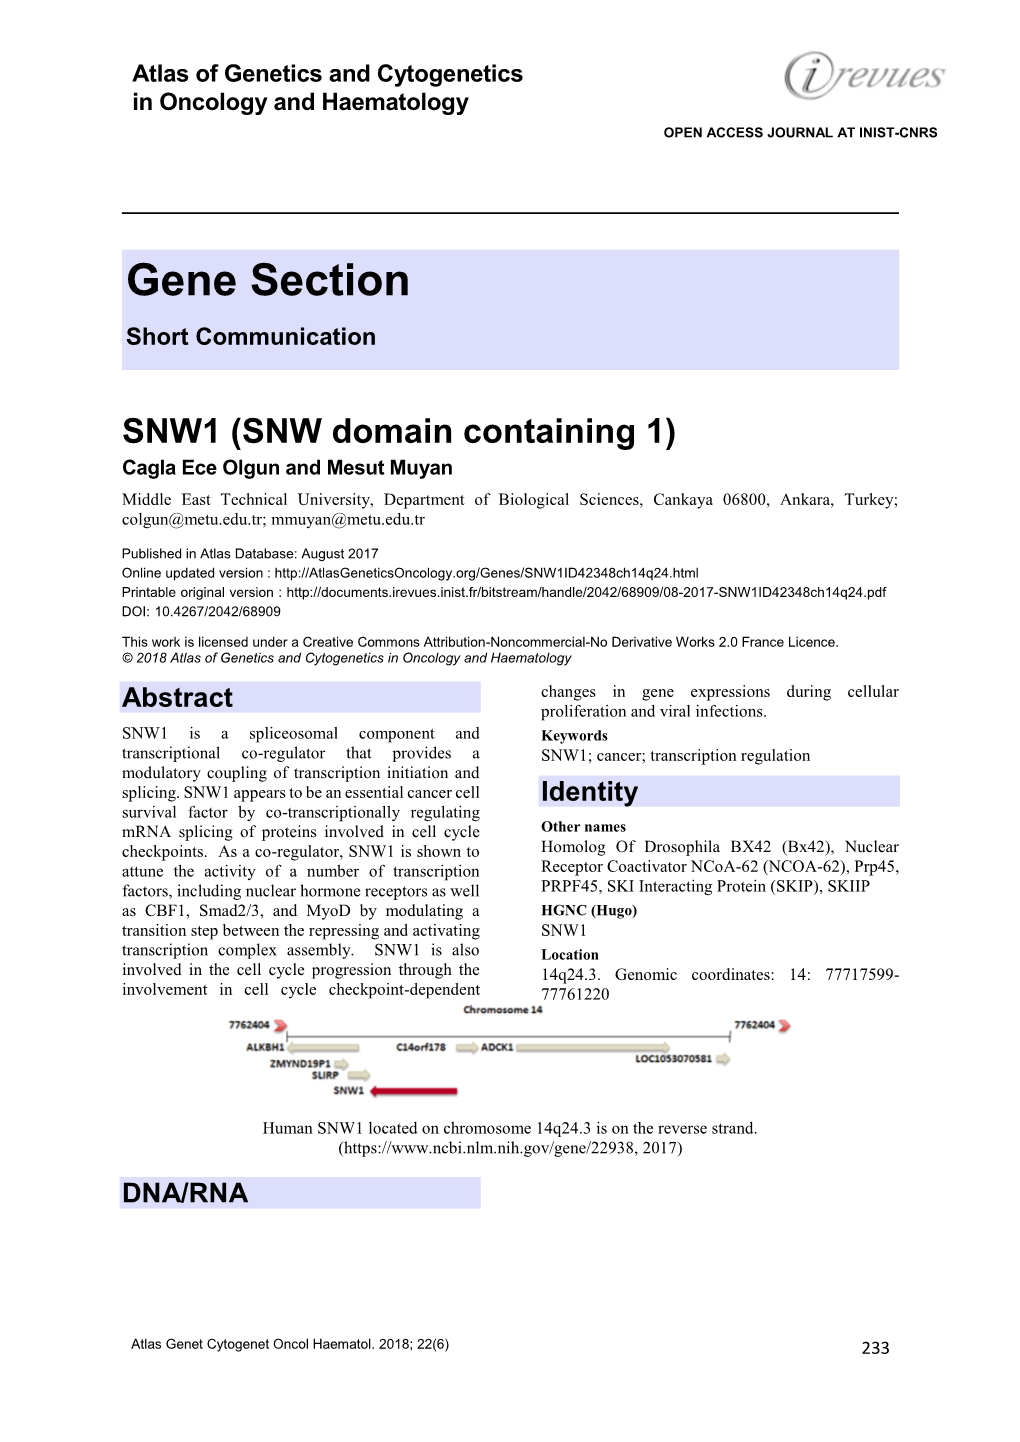 Gene Section Short Communication